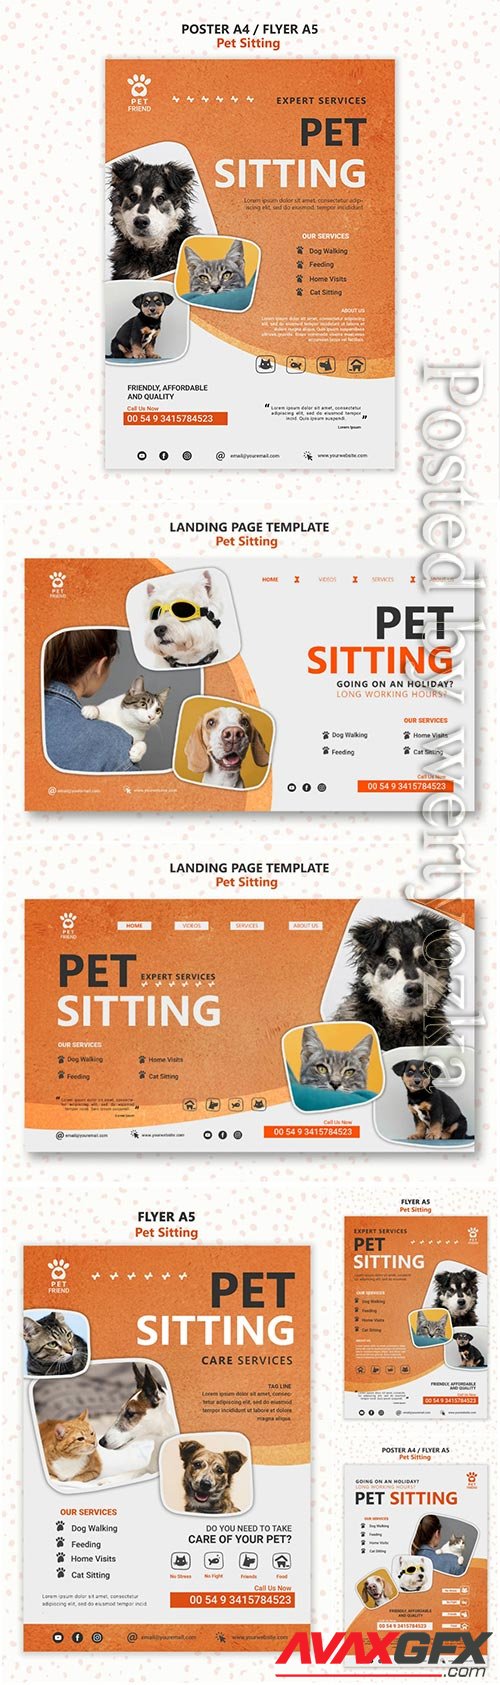 Pet sitting concept flyer template psd